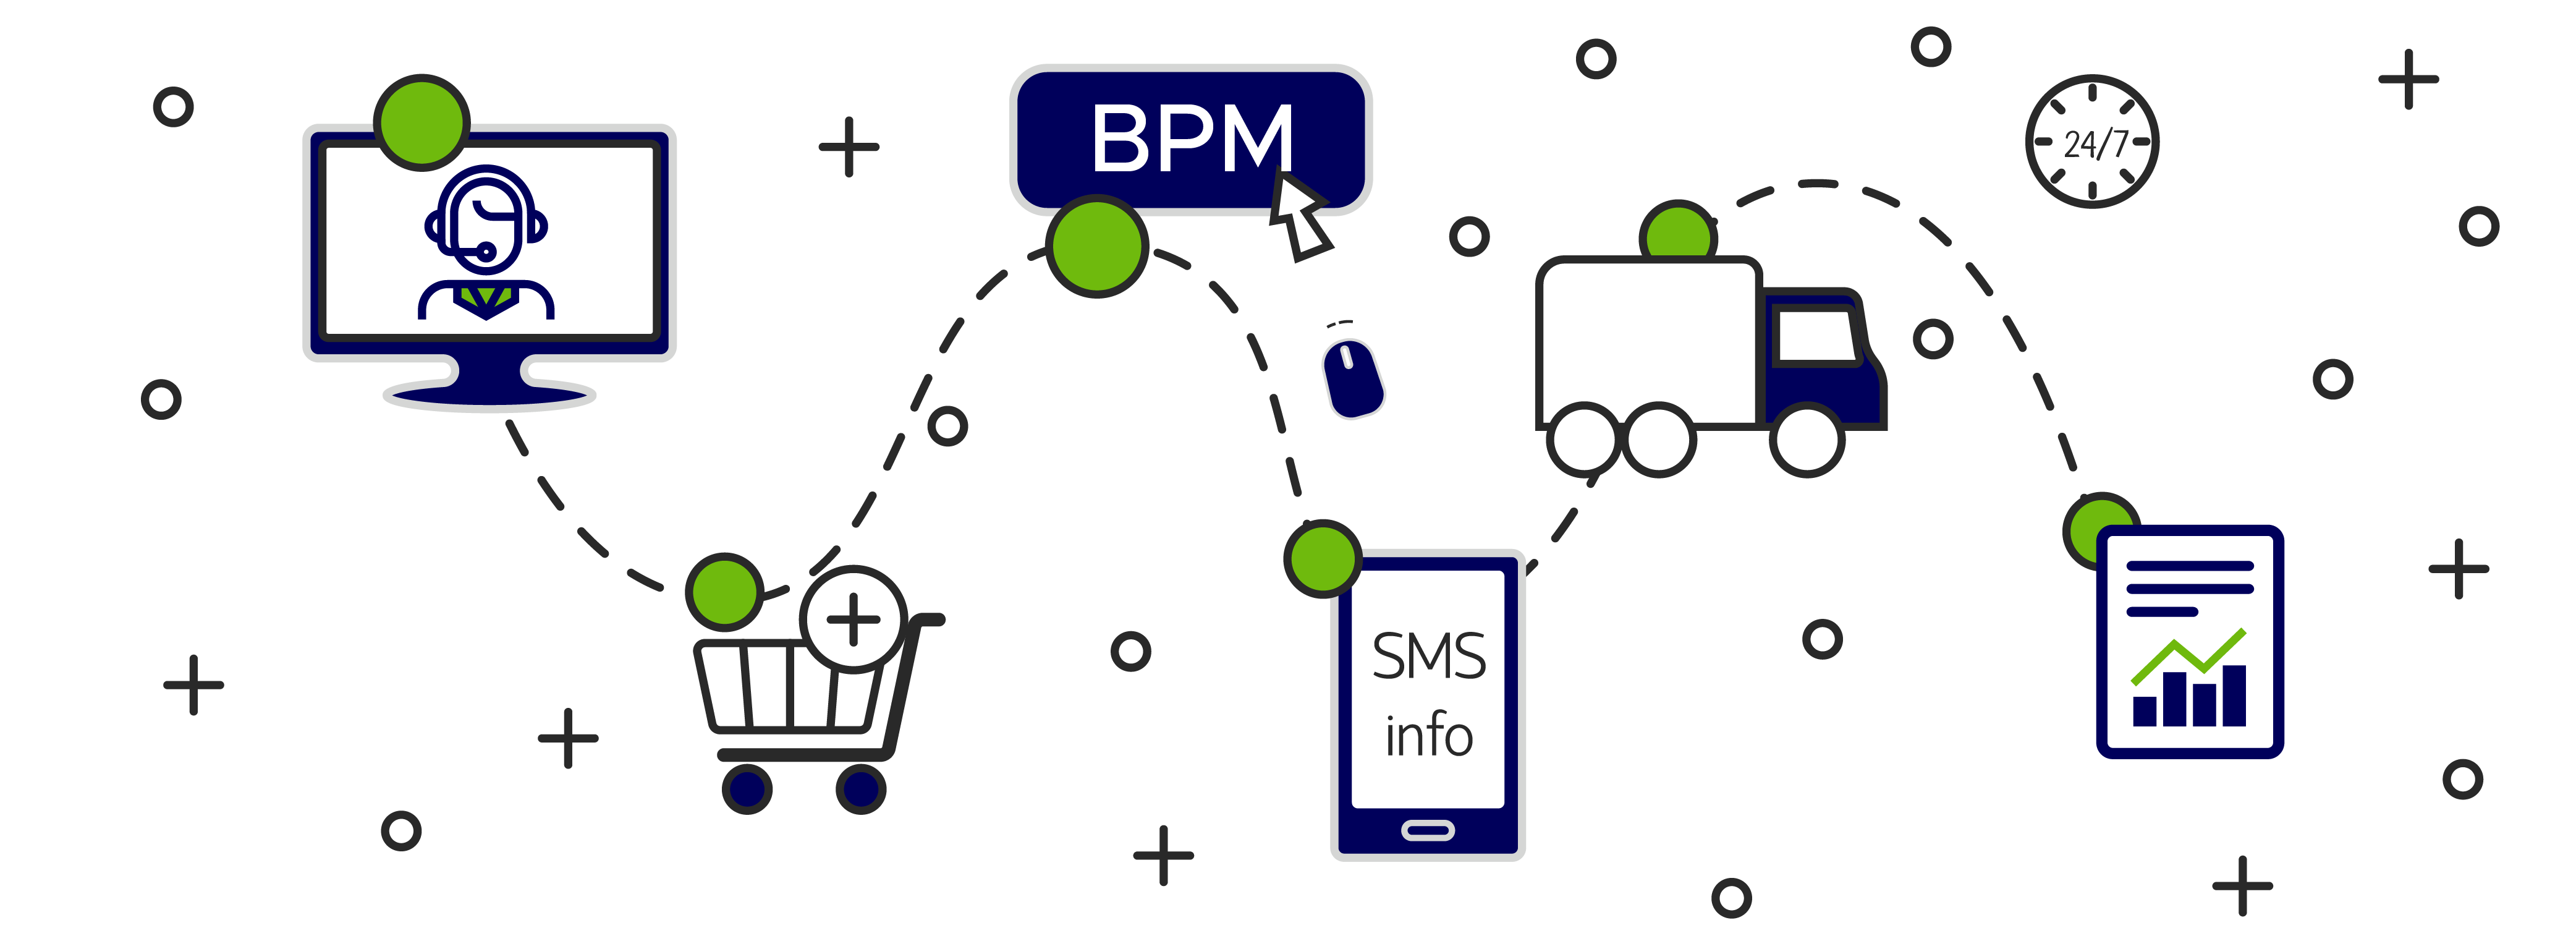 Iconos de videollamada, compra, BPM, SMS, entrega y Data - ACF Technologies